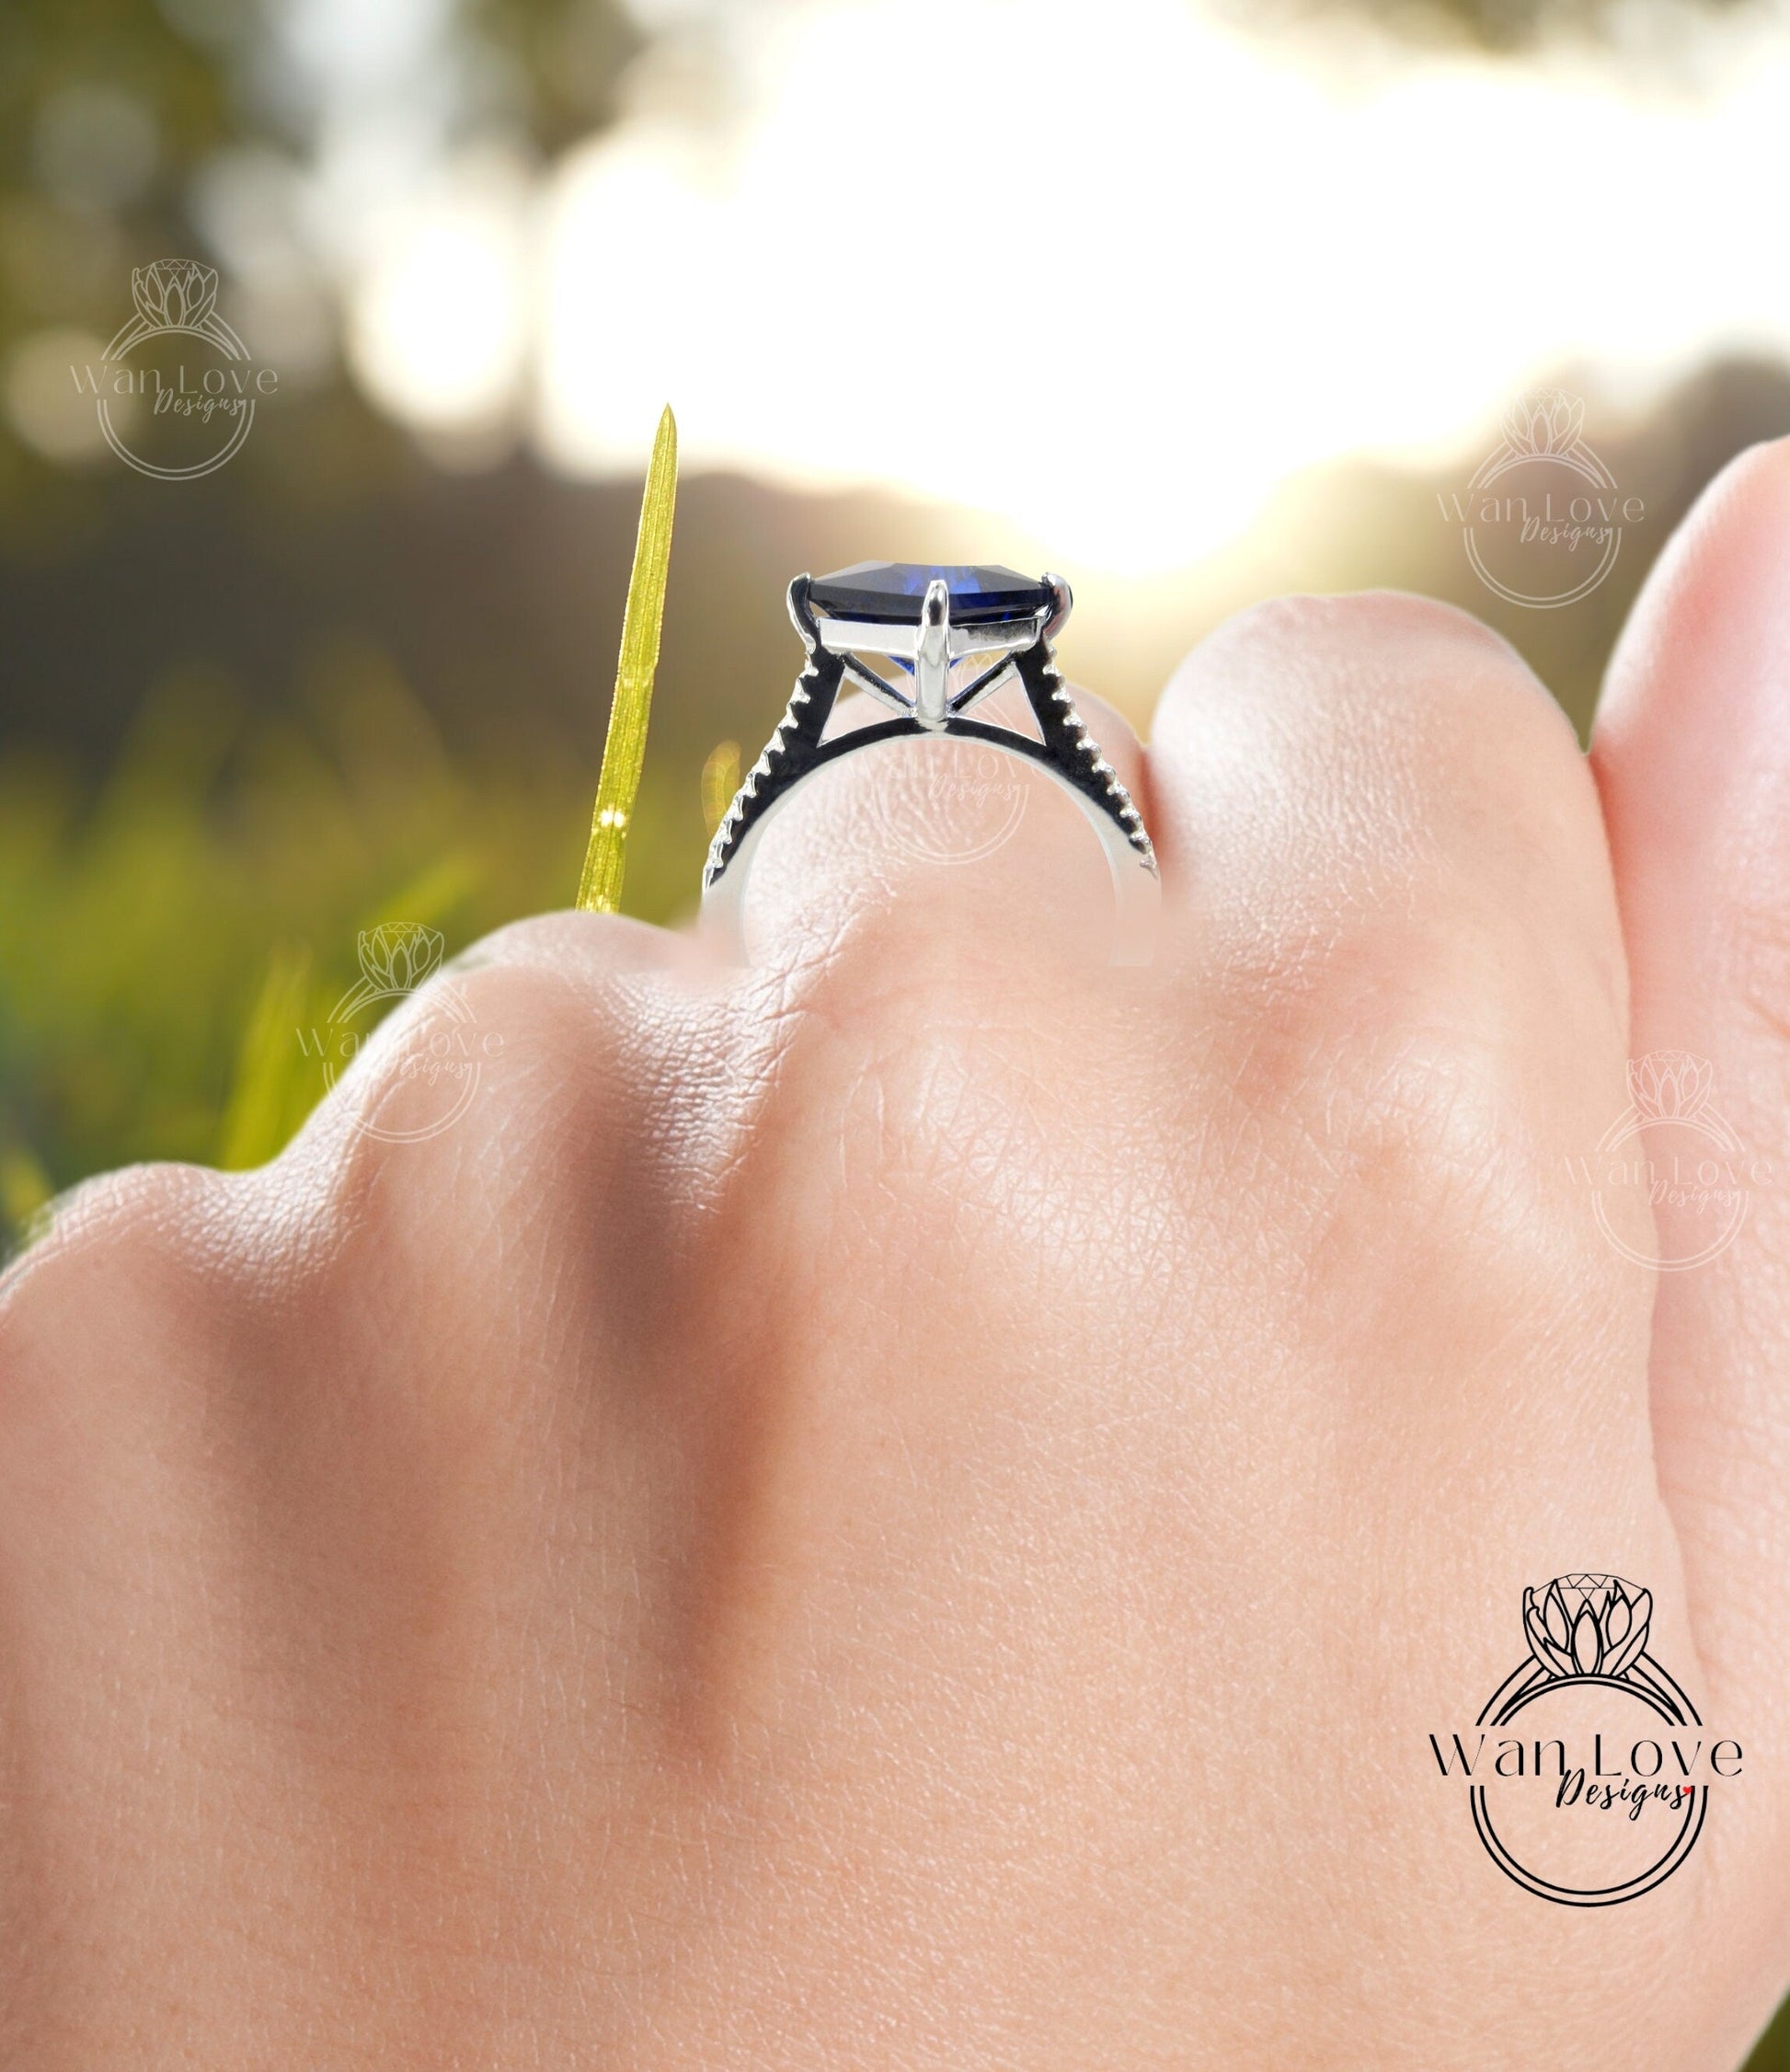 Kite Blue Sapphire Ring Princess Diamond Ring Geometric Engagement Ring Square claw prong Engagement Ring Kite Moissanite Gemstone Ring Wan Love Designs